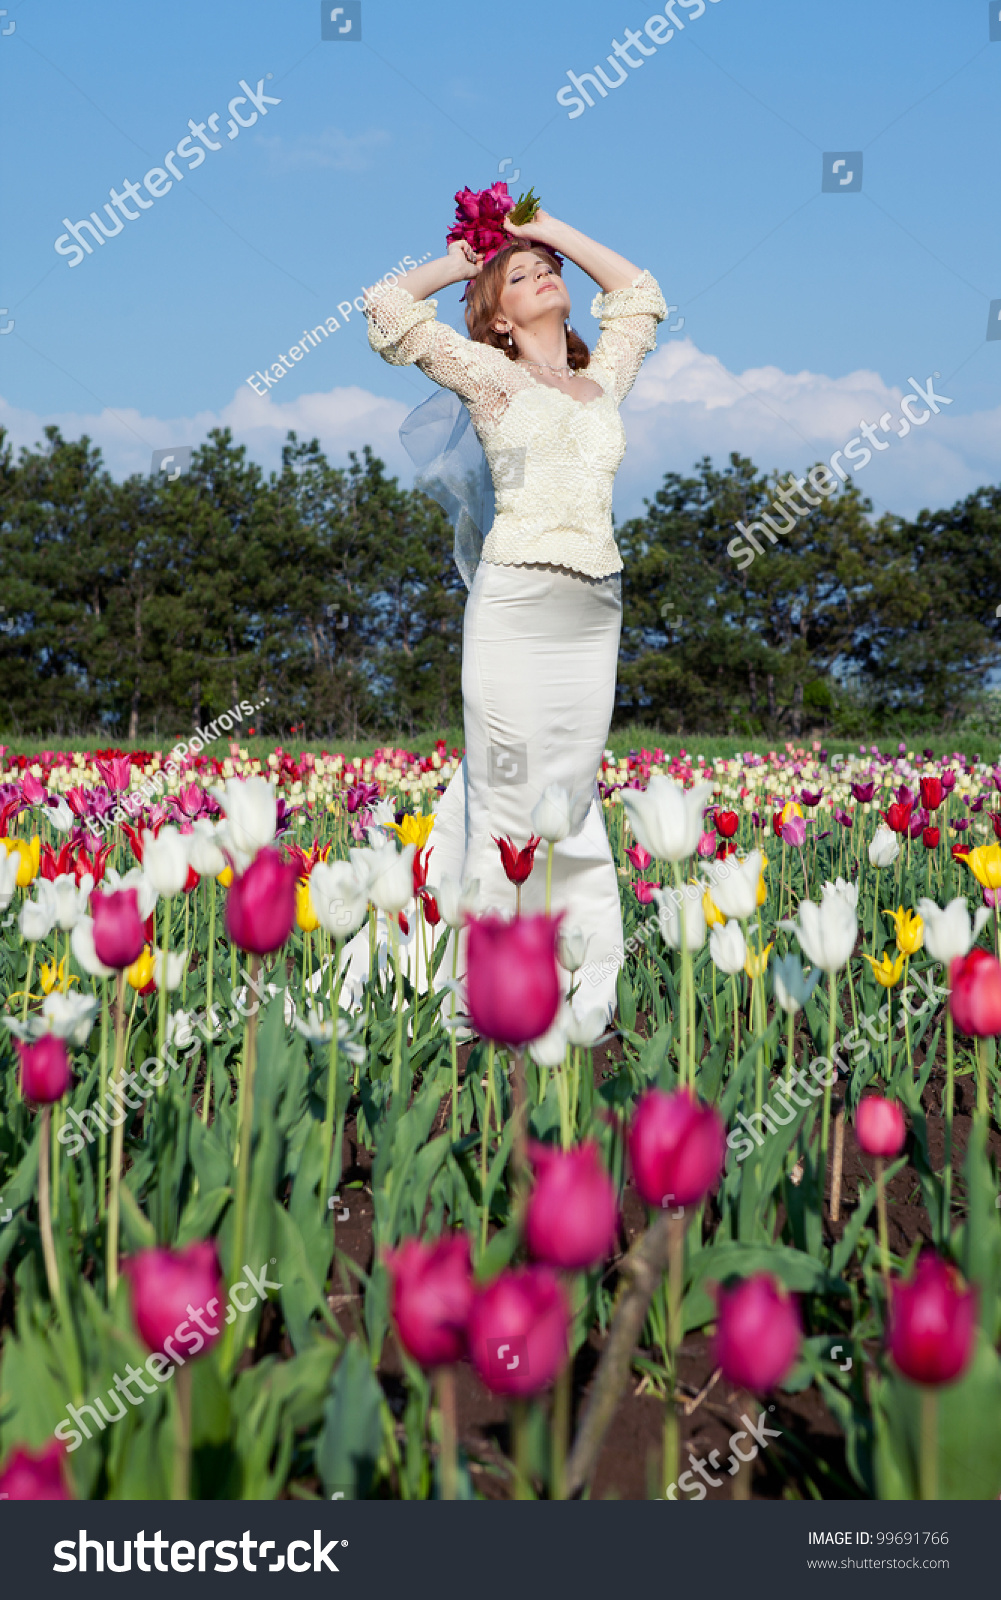 Beautiful Girl In Wedding Dress In Tulips Field Stock Photo 99691766 ...